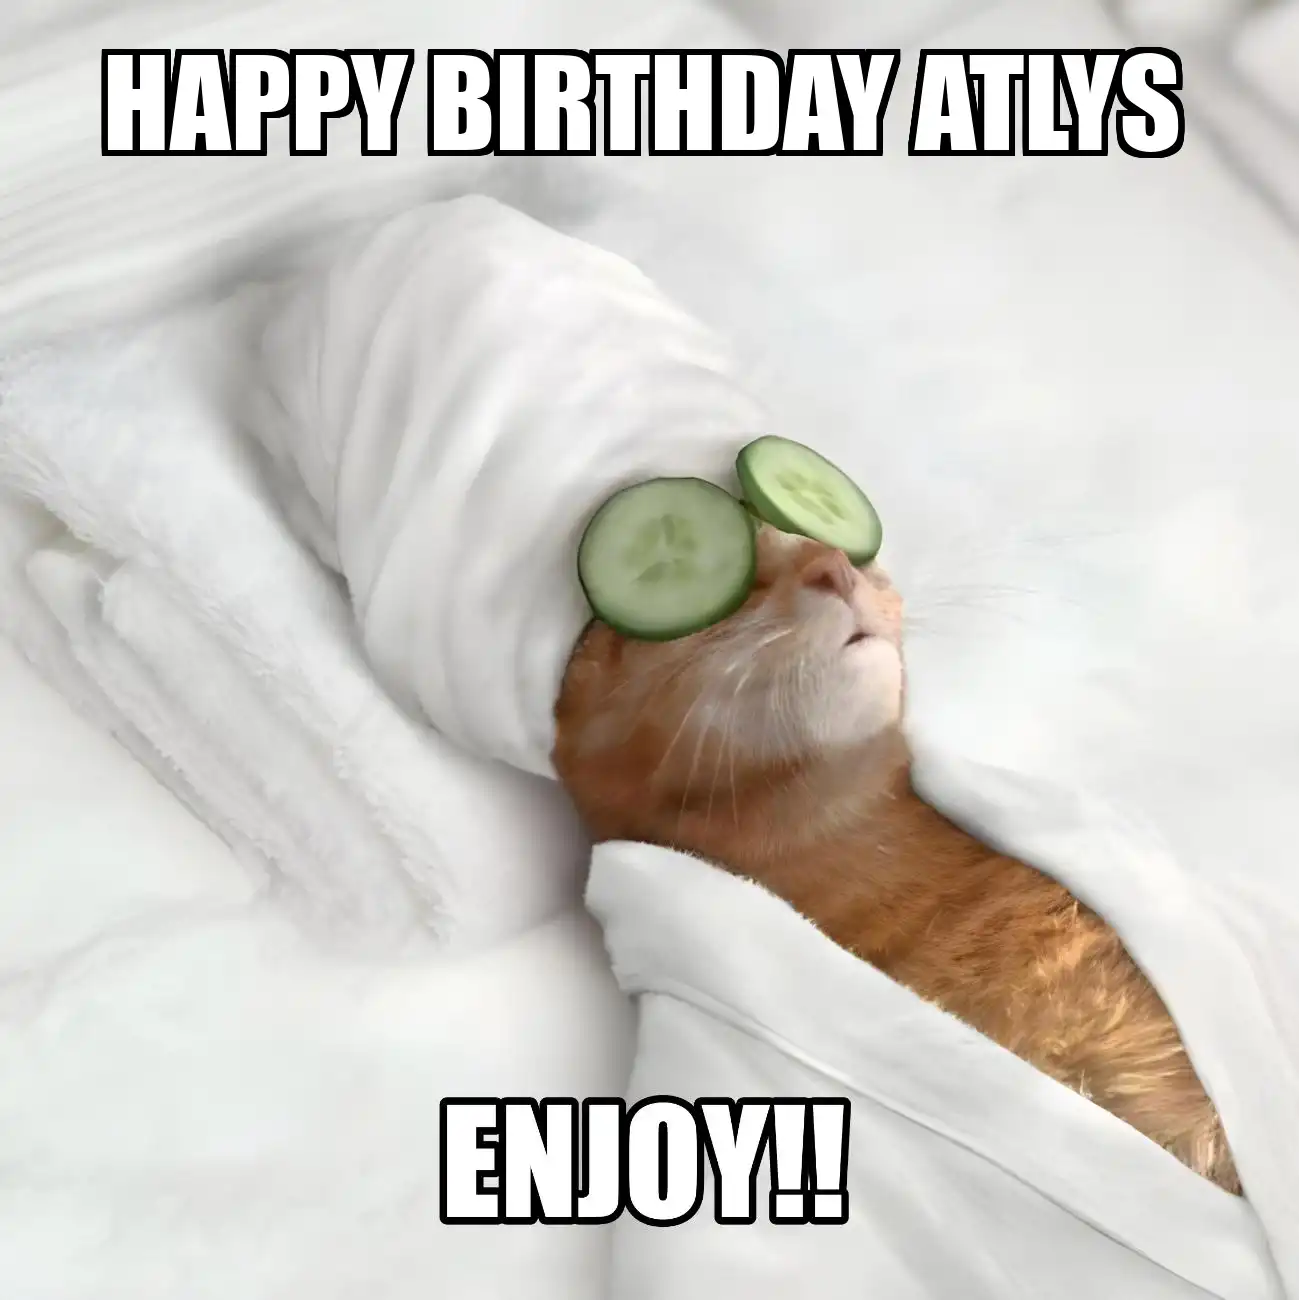 Happy Birthday Atlys Enjoy Cat Meme